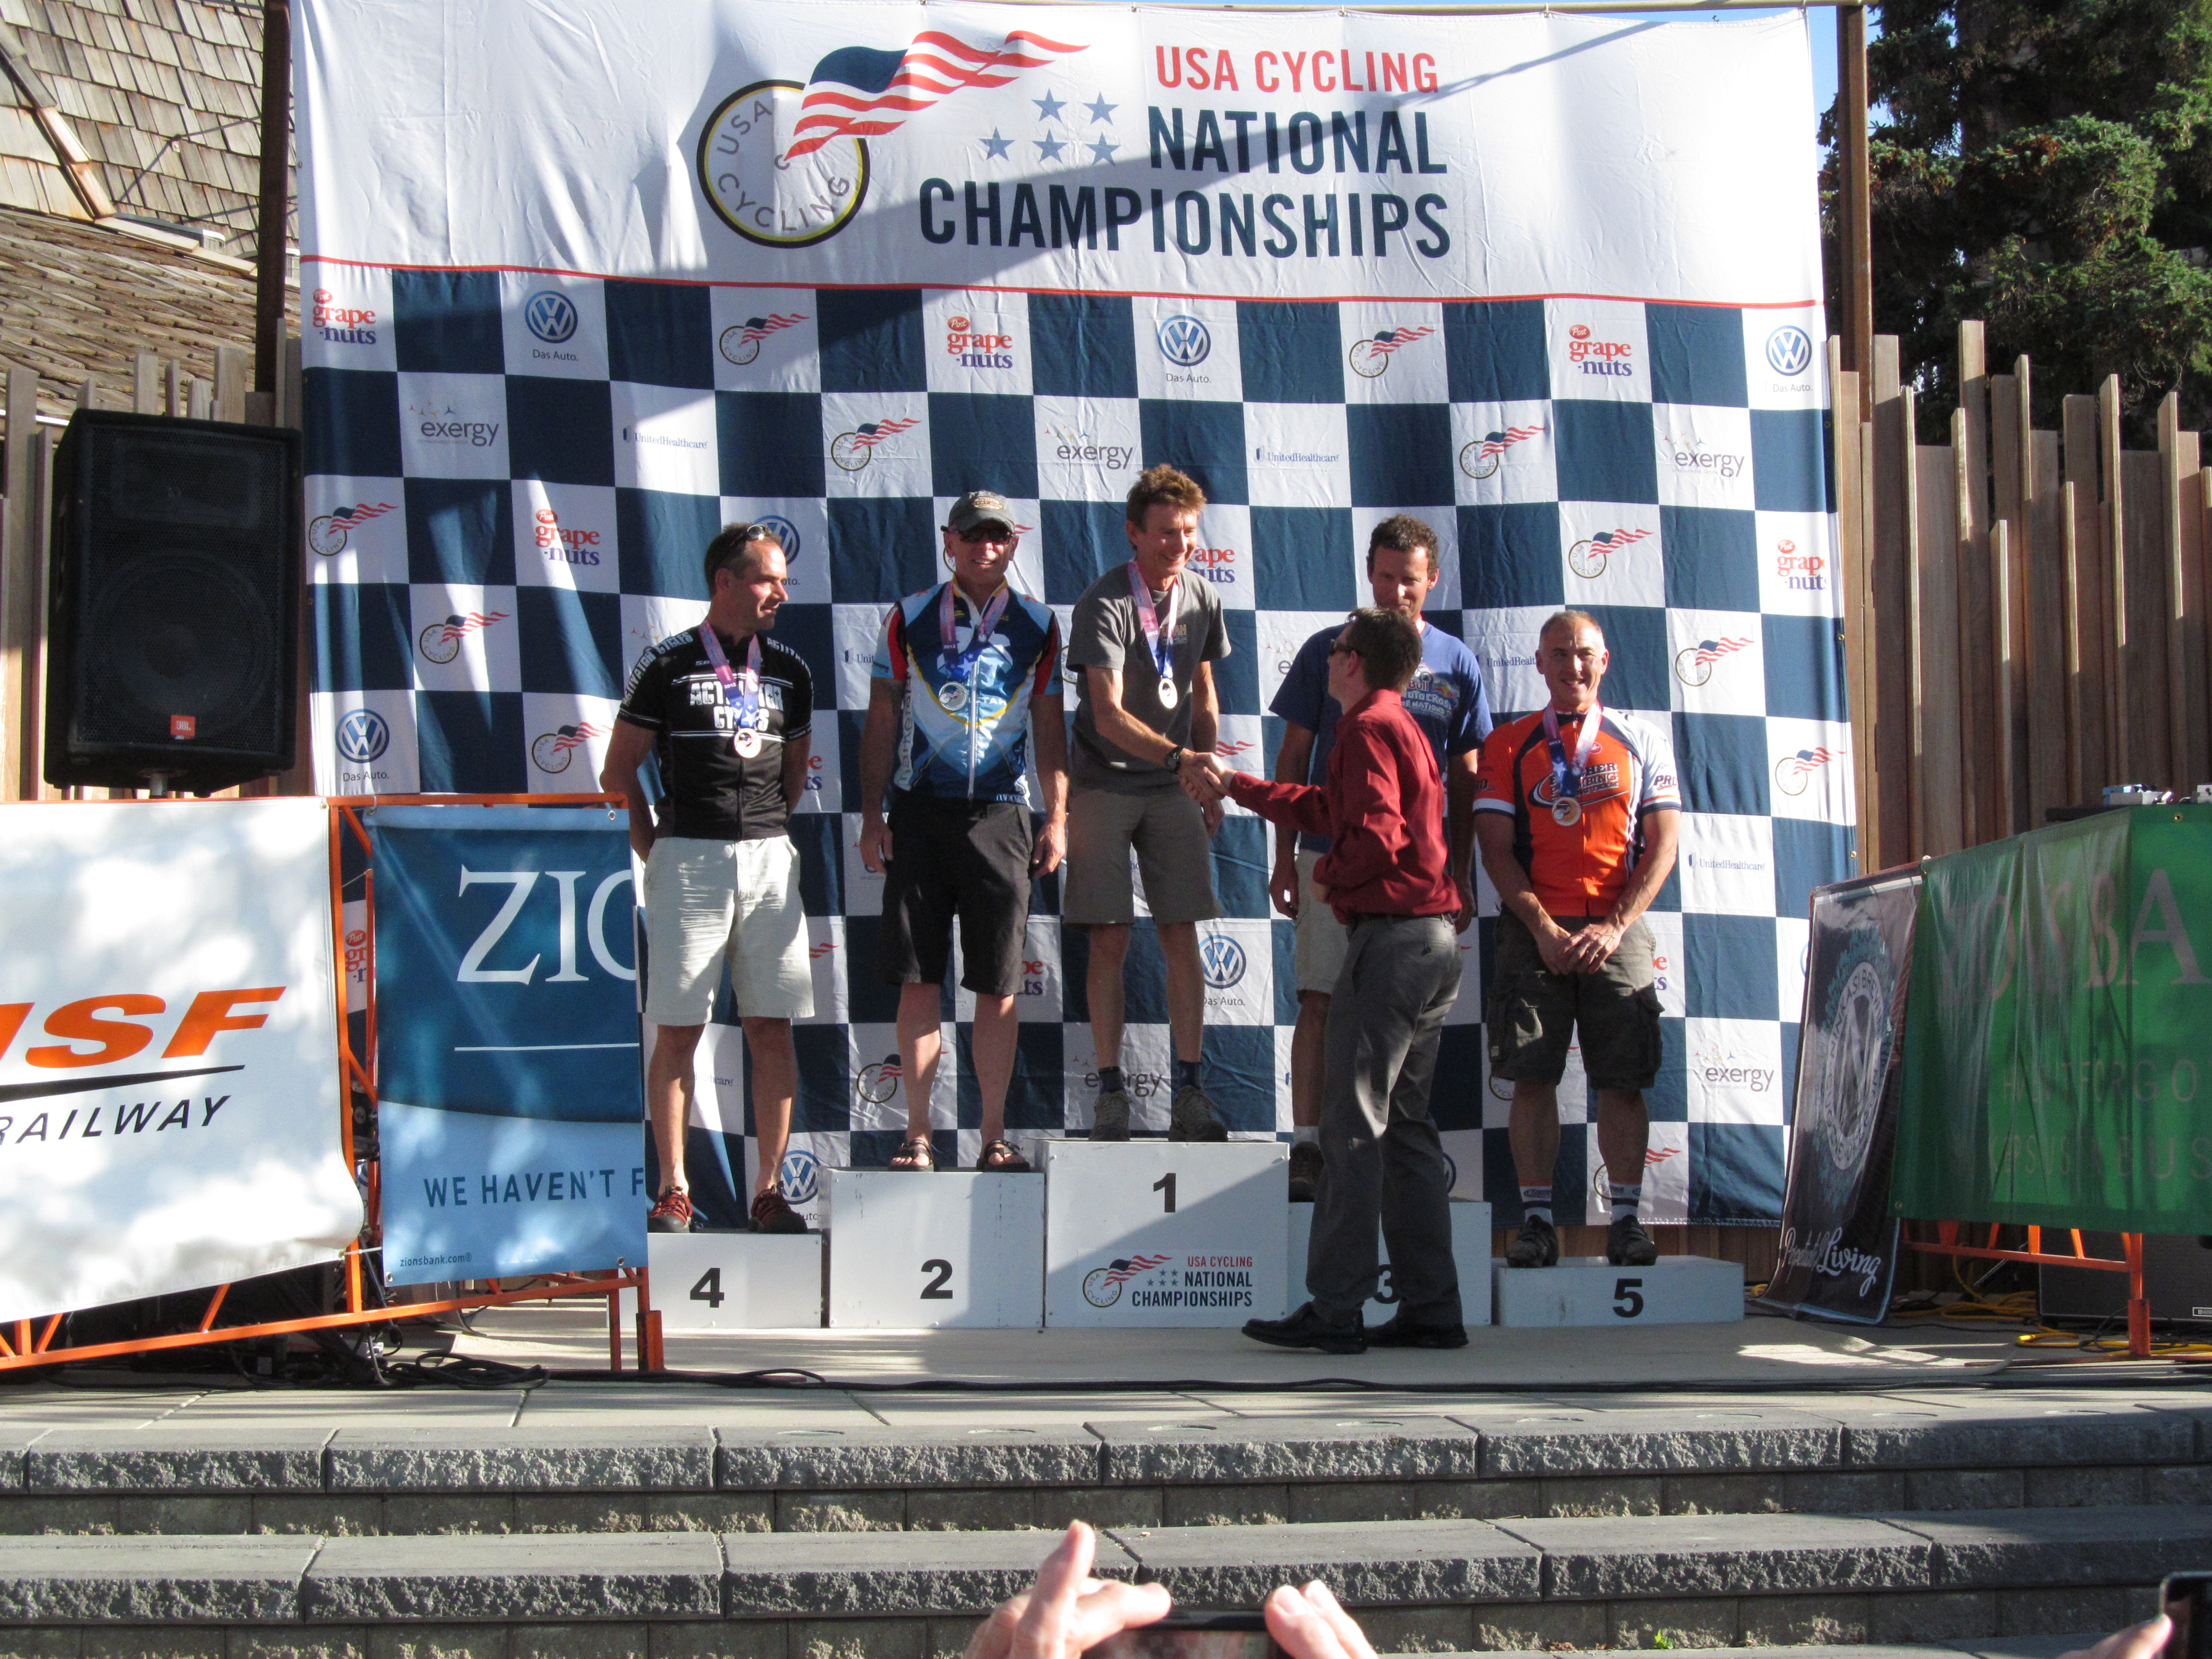 2012 USA National Championships XC MTB 50-55 age group podium